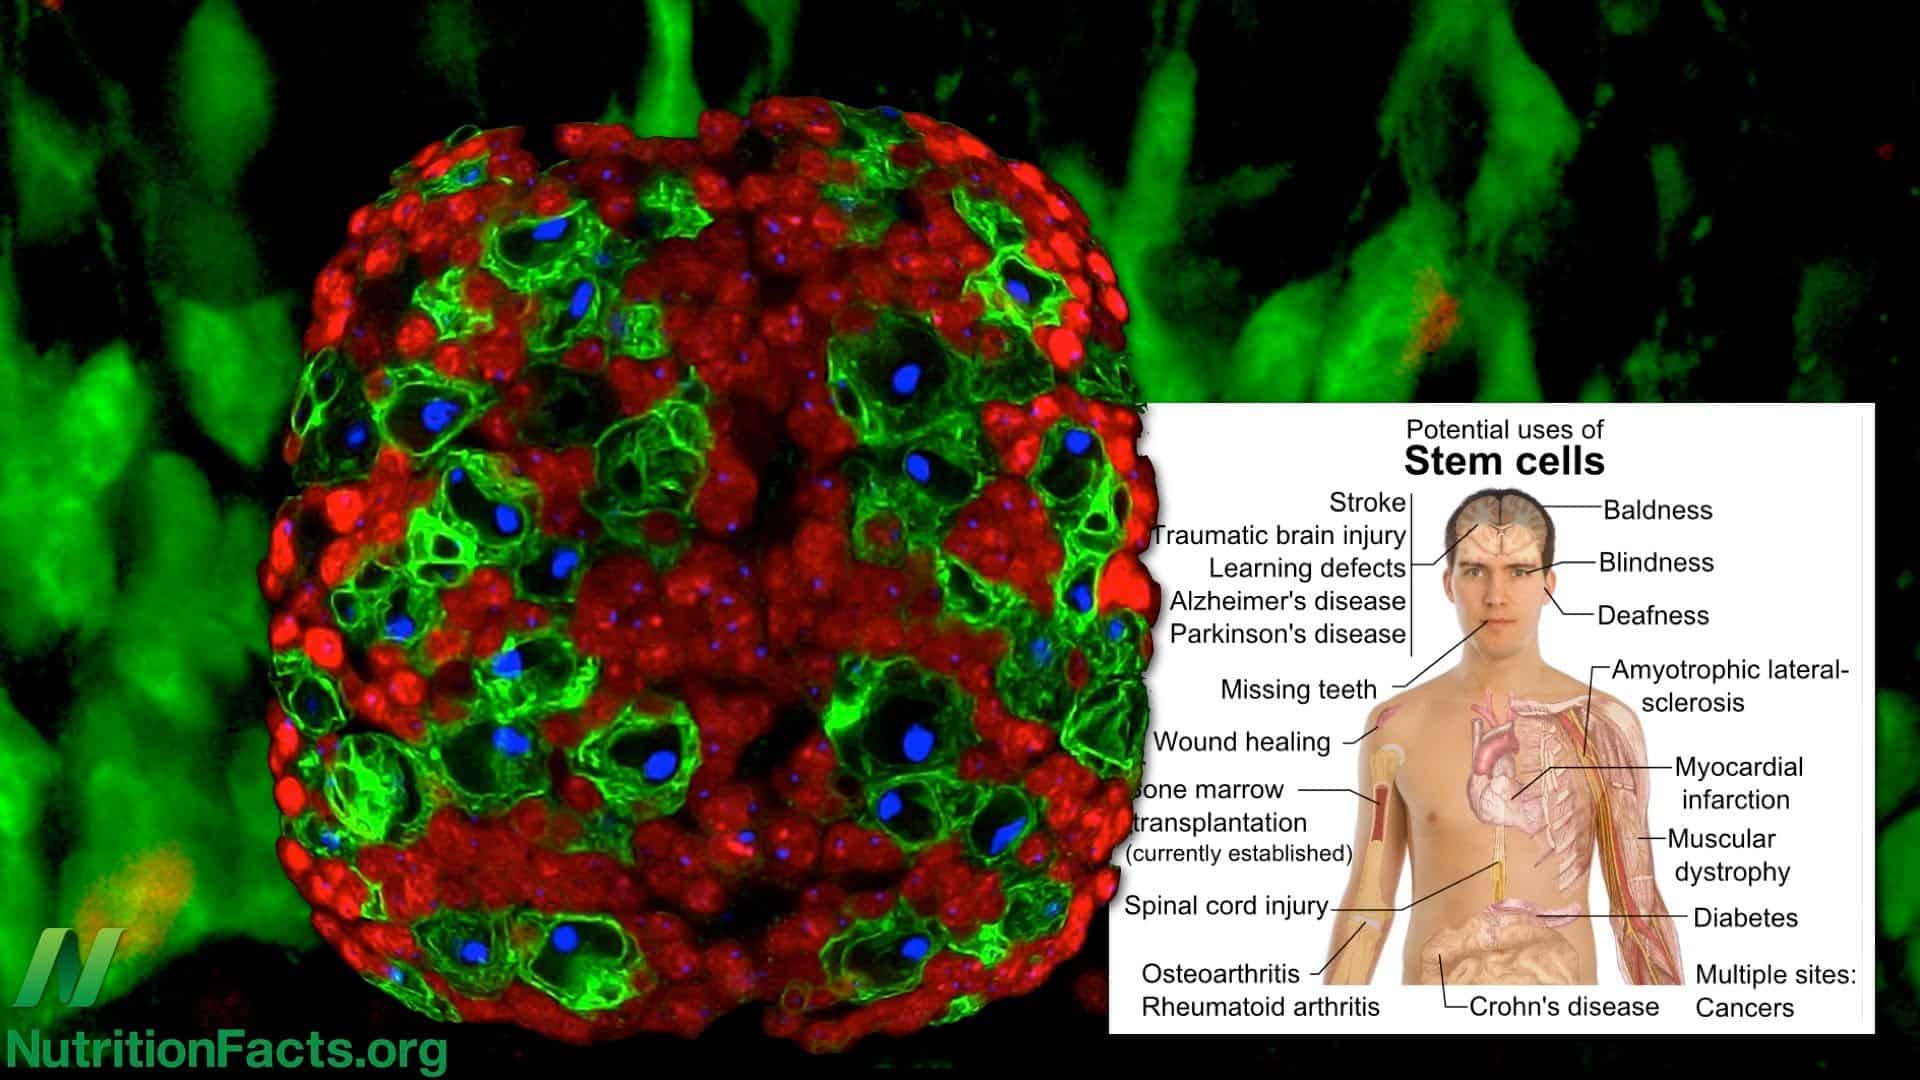 Broccoli Versus Breast Cancer Stem Cells